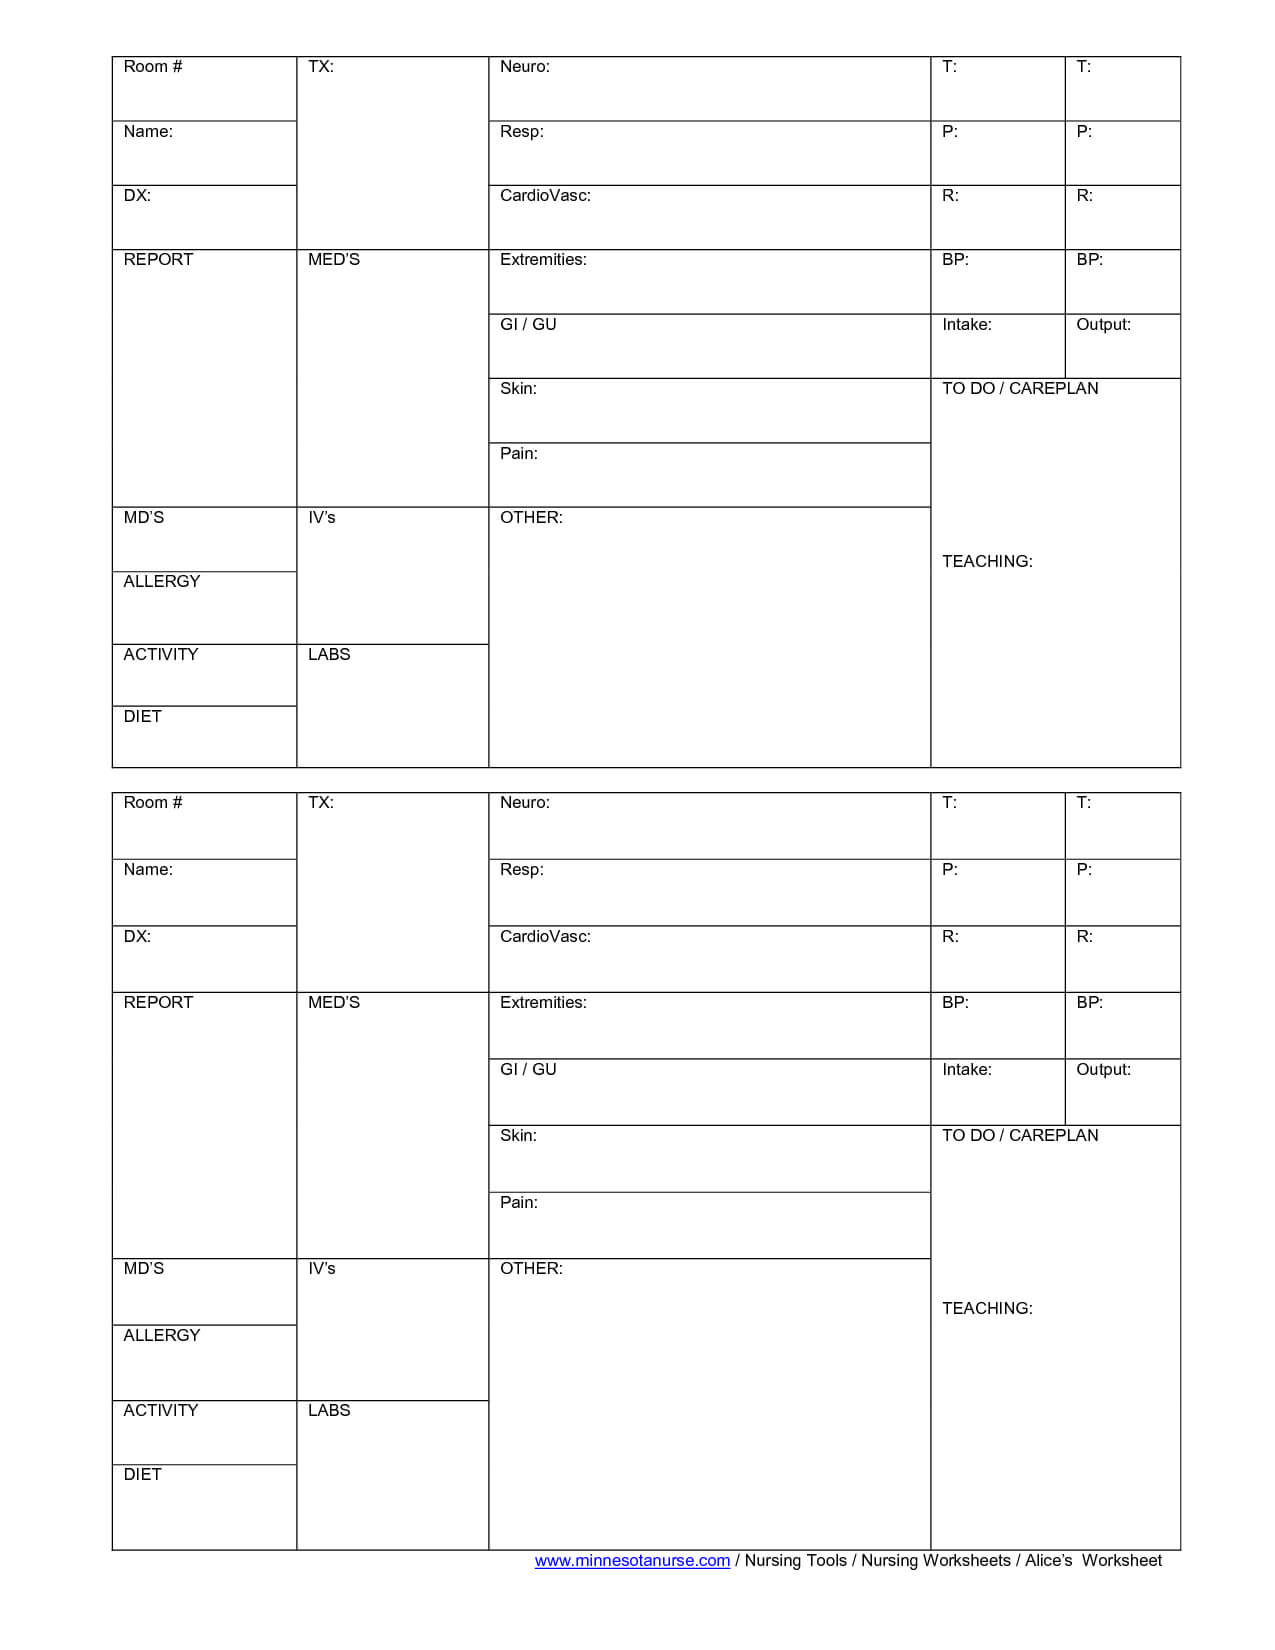 Blank Nursing Report Sheets For Newborns | Nursing Patient For Nursing Report Sheet Template